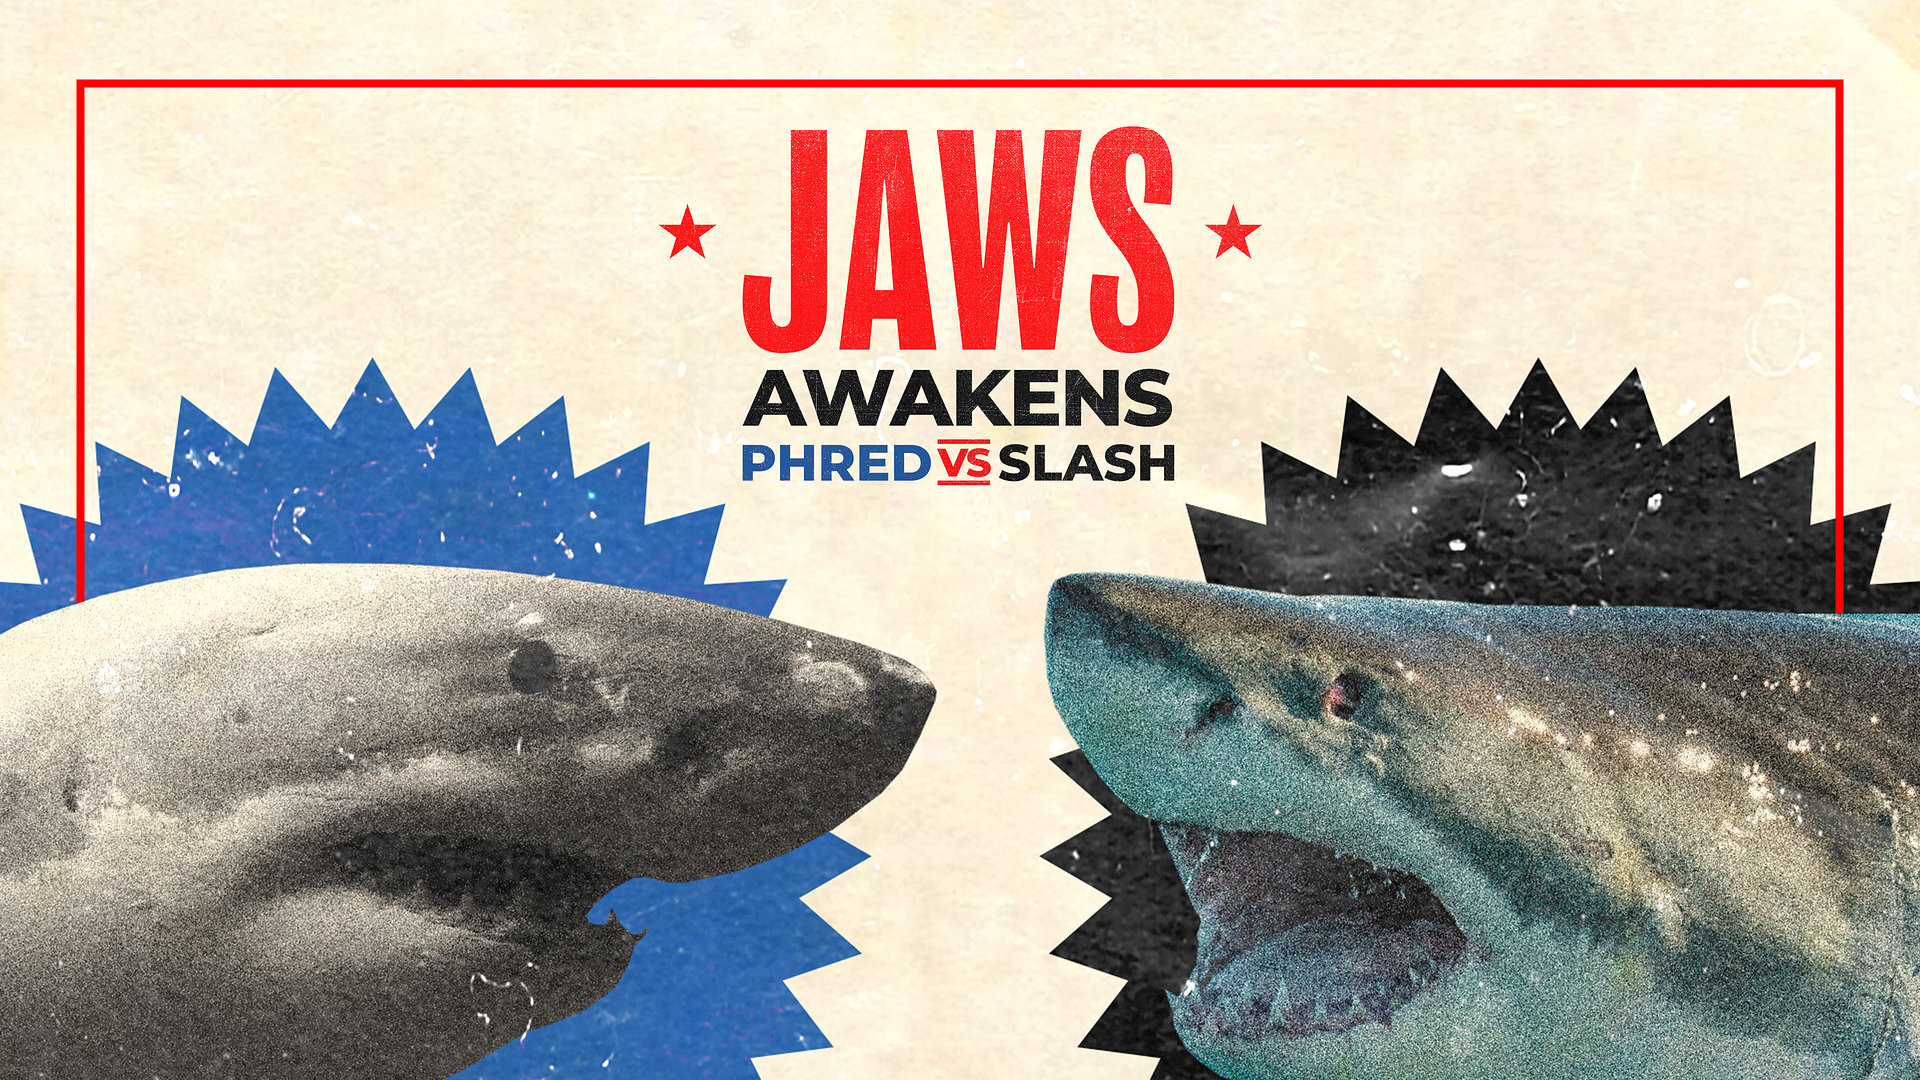 Jaws Awakens: Phred vs Slash